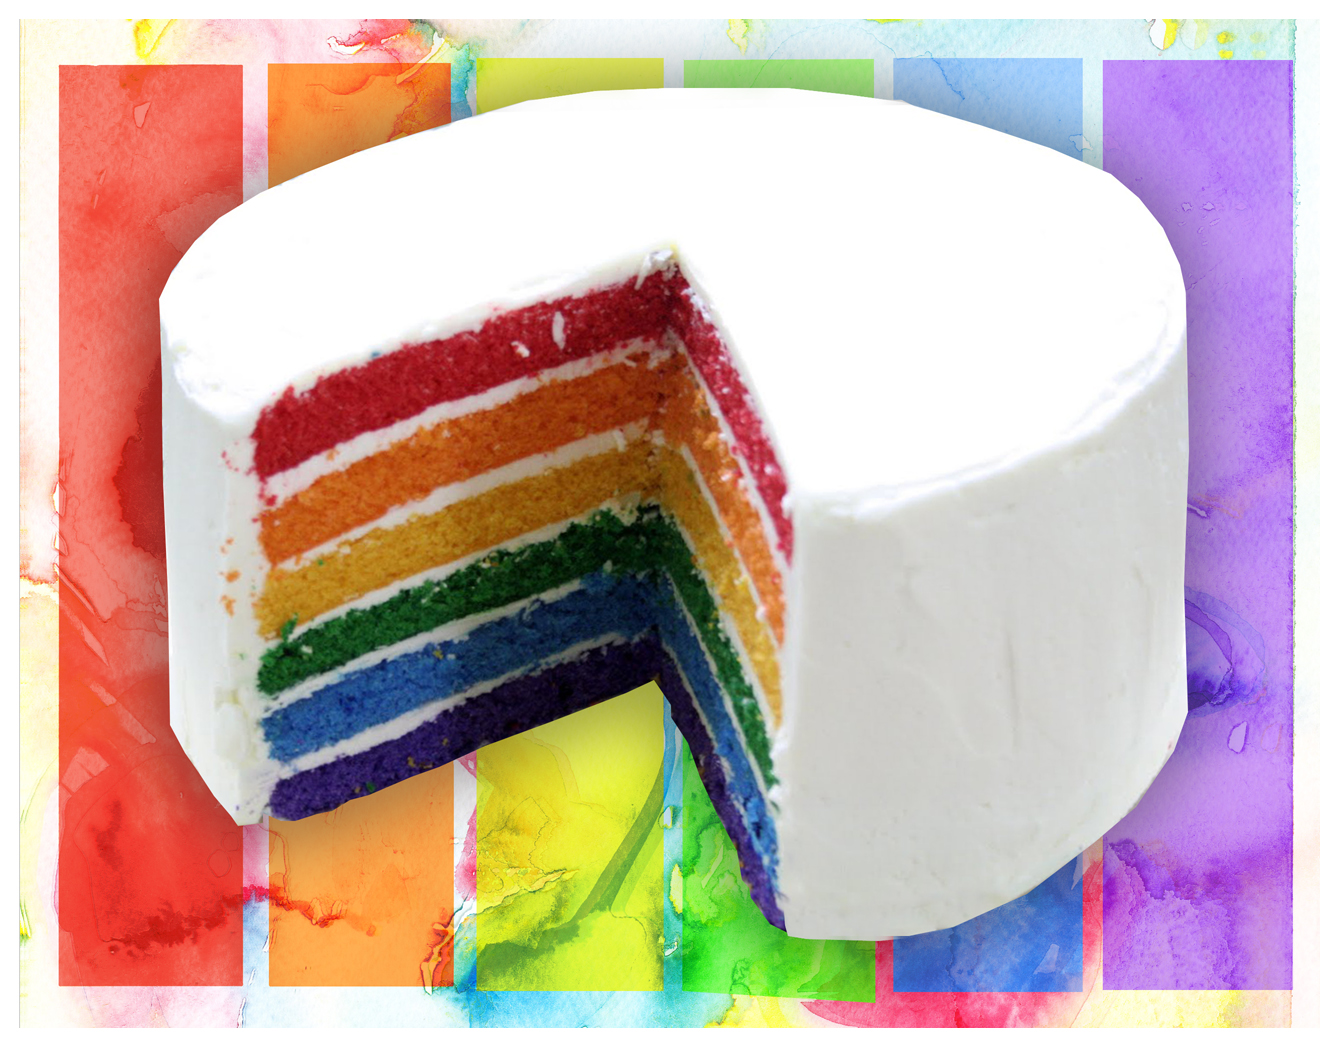 rainbow-cake-finnished-1mb.jpg